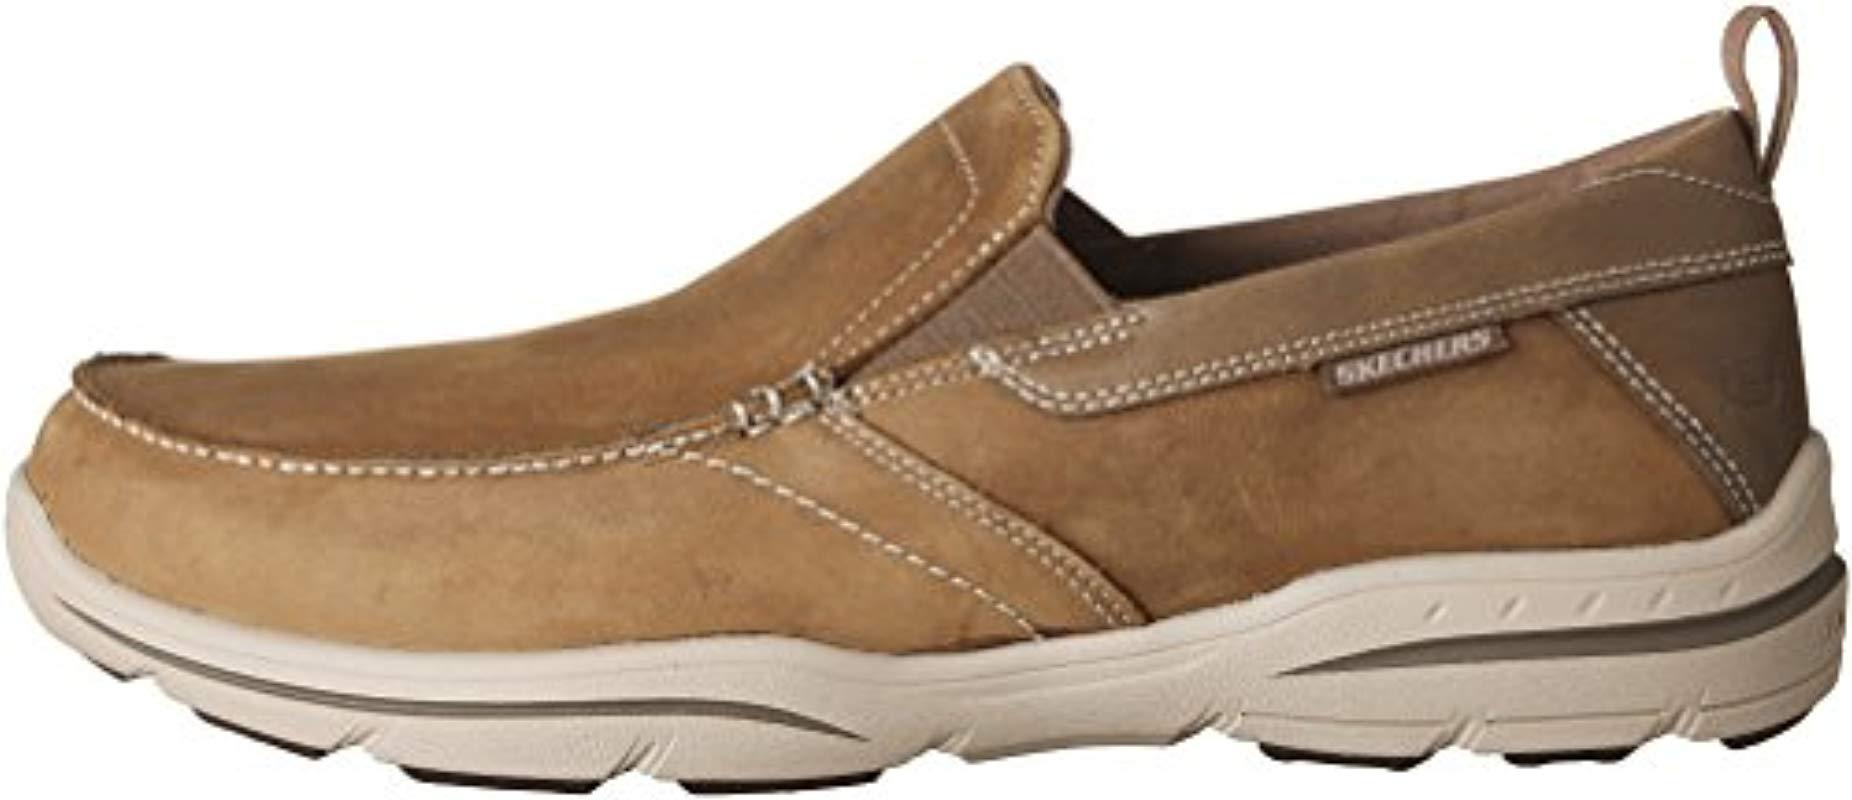 Lyst - Skechers Harper-forde Driving Style Loafer in Brown for Men ...